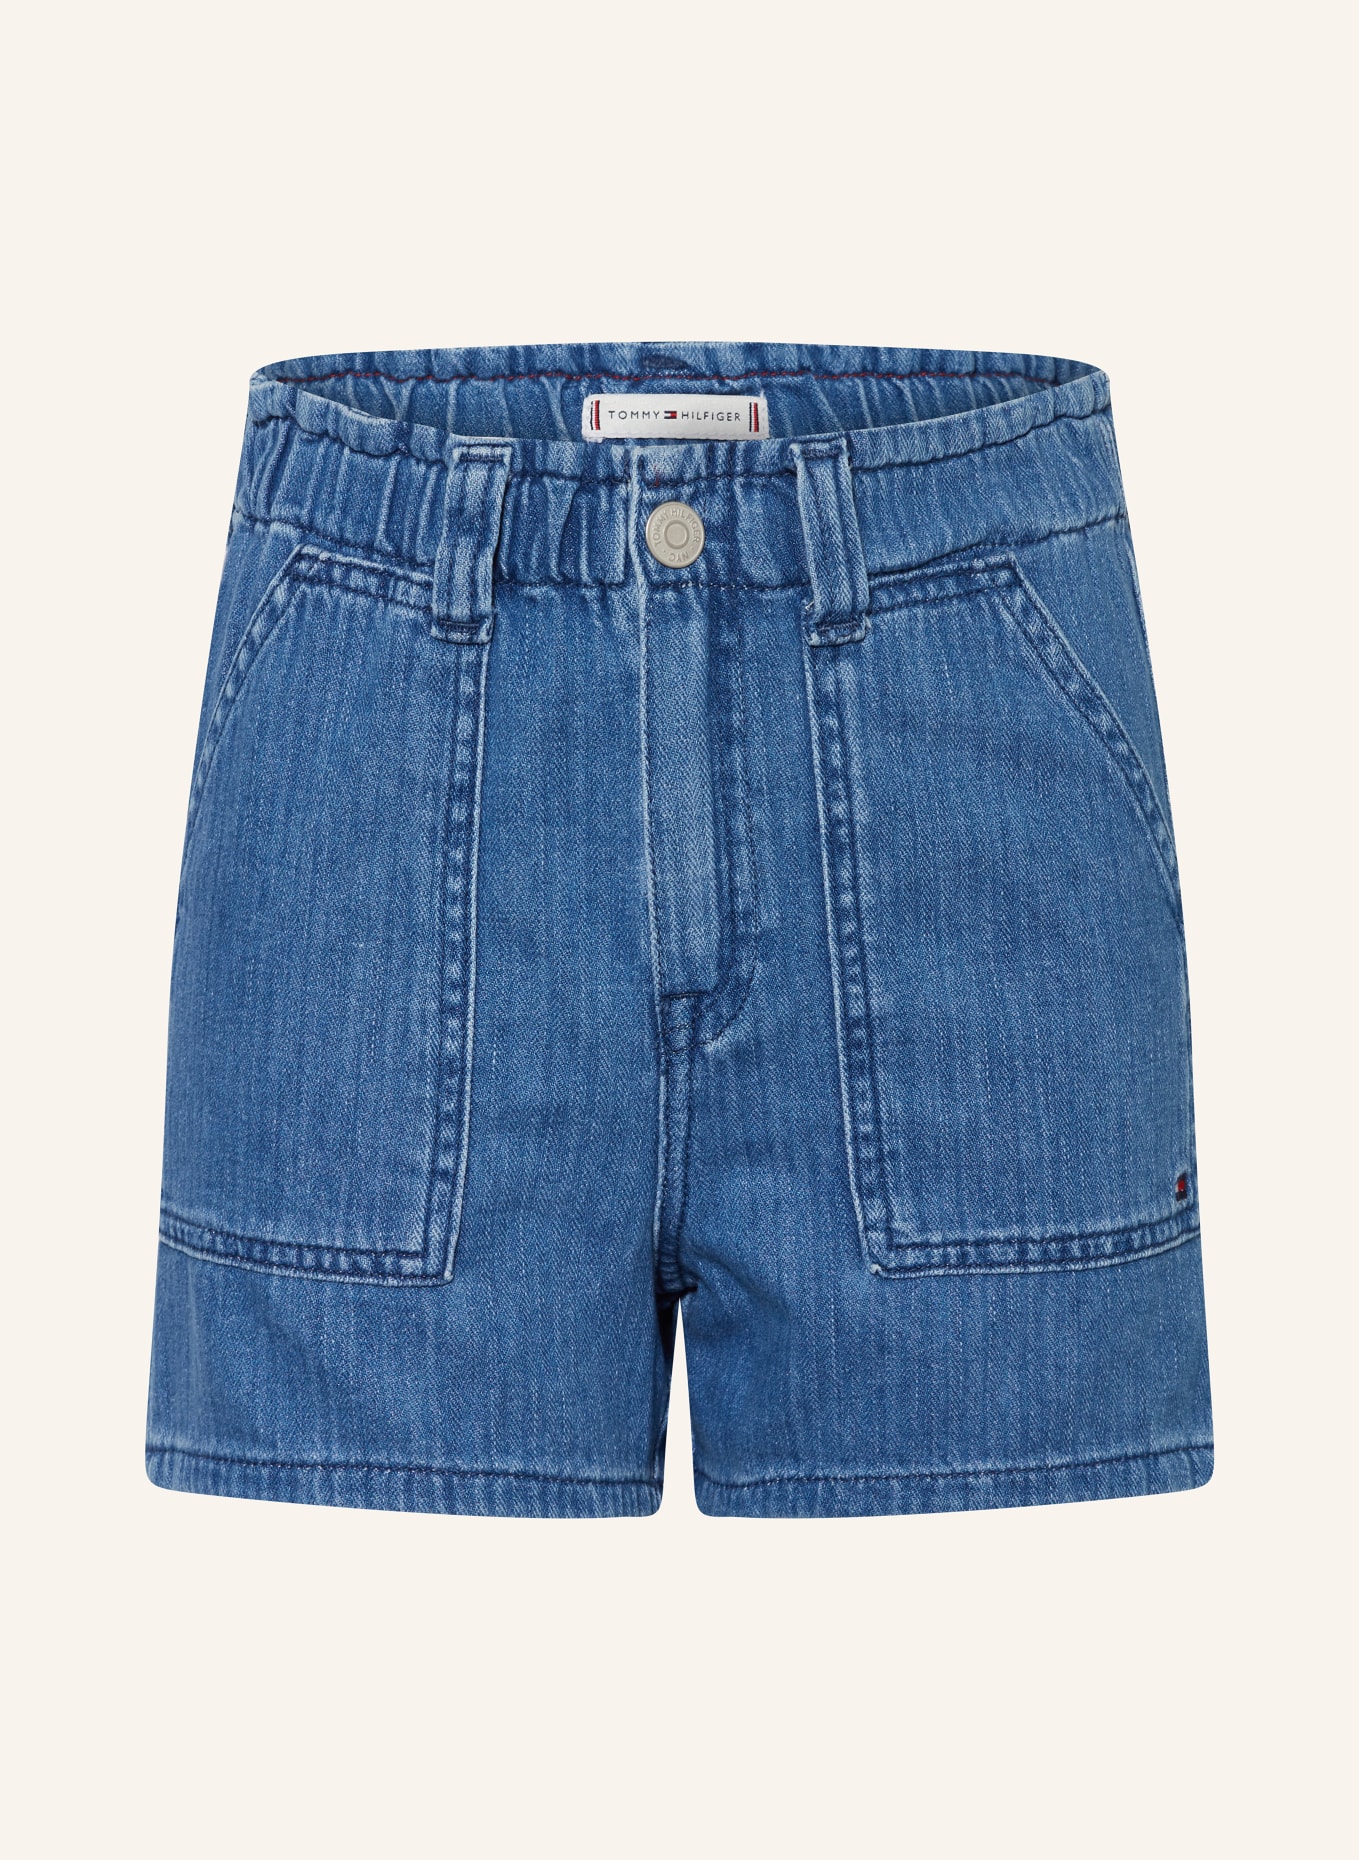 TOMMY HILFIGER Shorts in Jeansoptik, Farbe: BLAU (Bild 1)